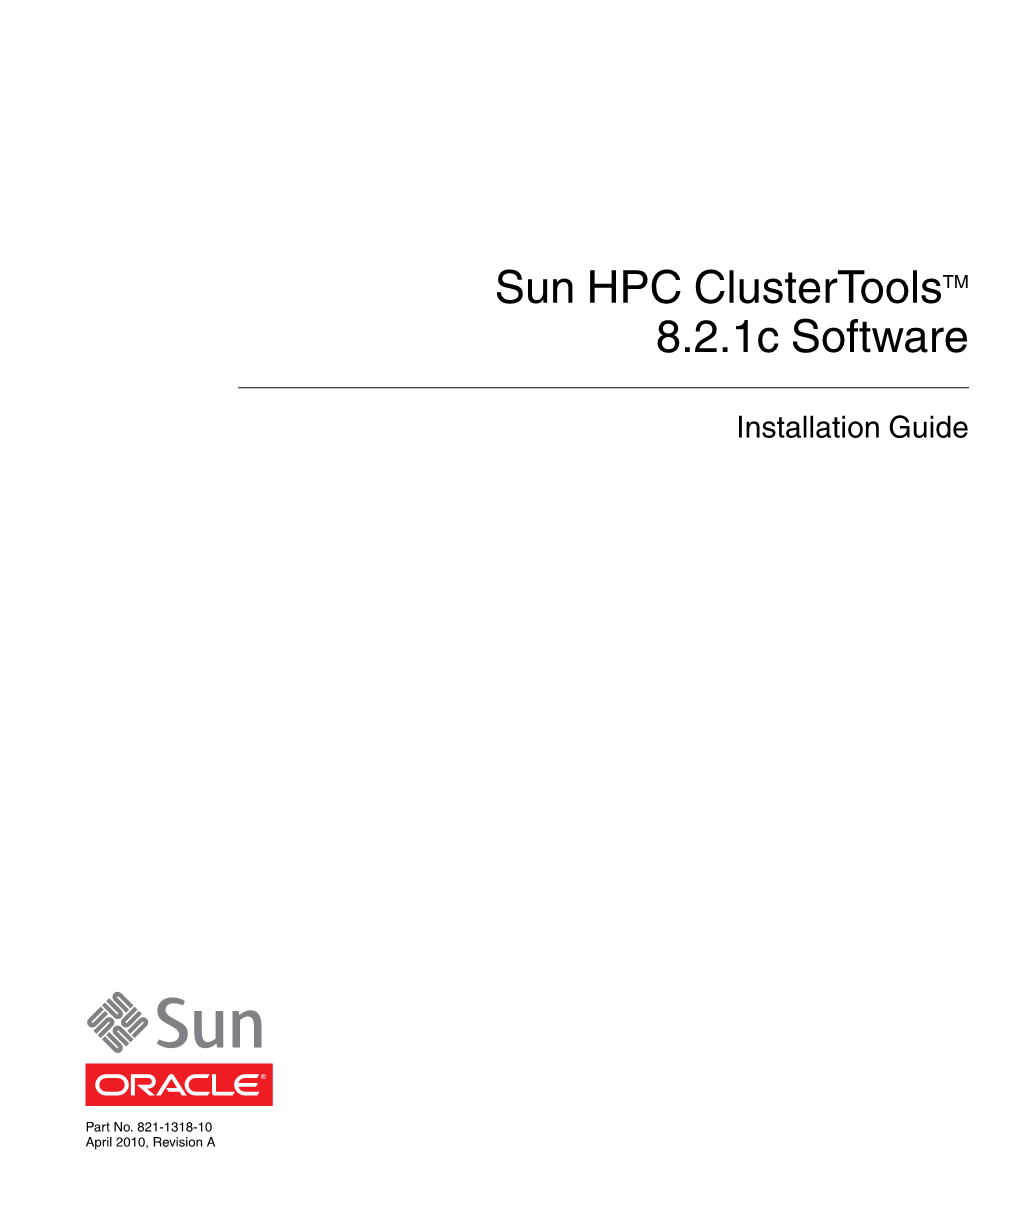 Sun HPC Clustertools 8.2.1C Software Installation Guide • April 2010 Preface